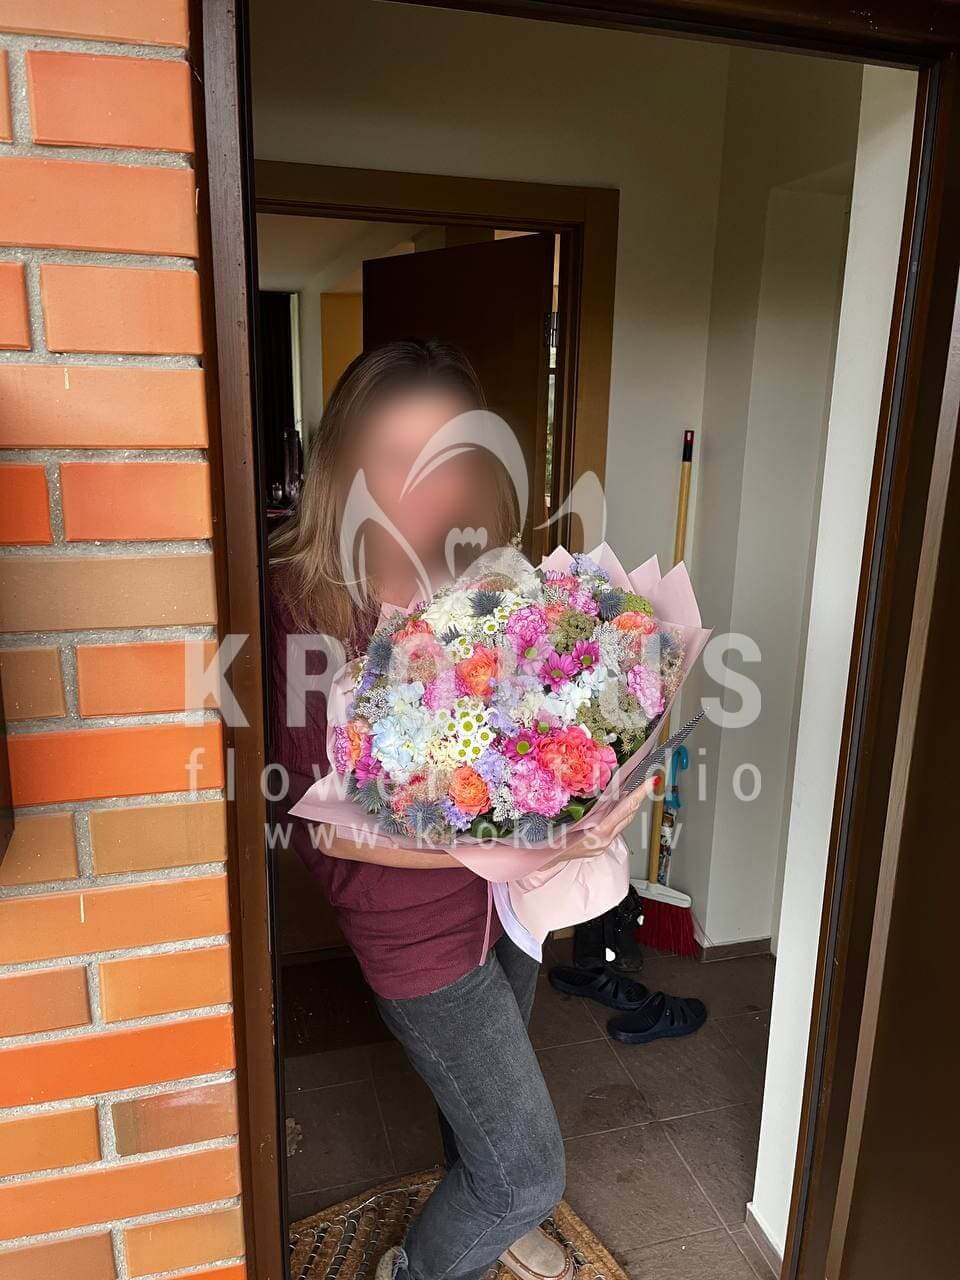 Deliver flowers to Latvia (limoniumclovesgoldenrodhydrangeaschrysanthemumsculantrobicolor rosesveronicacheesewood)